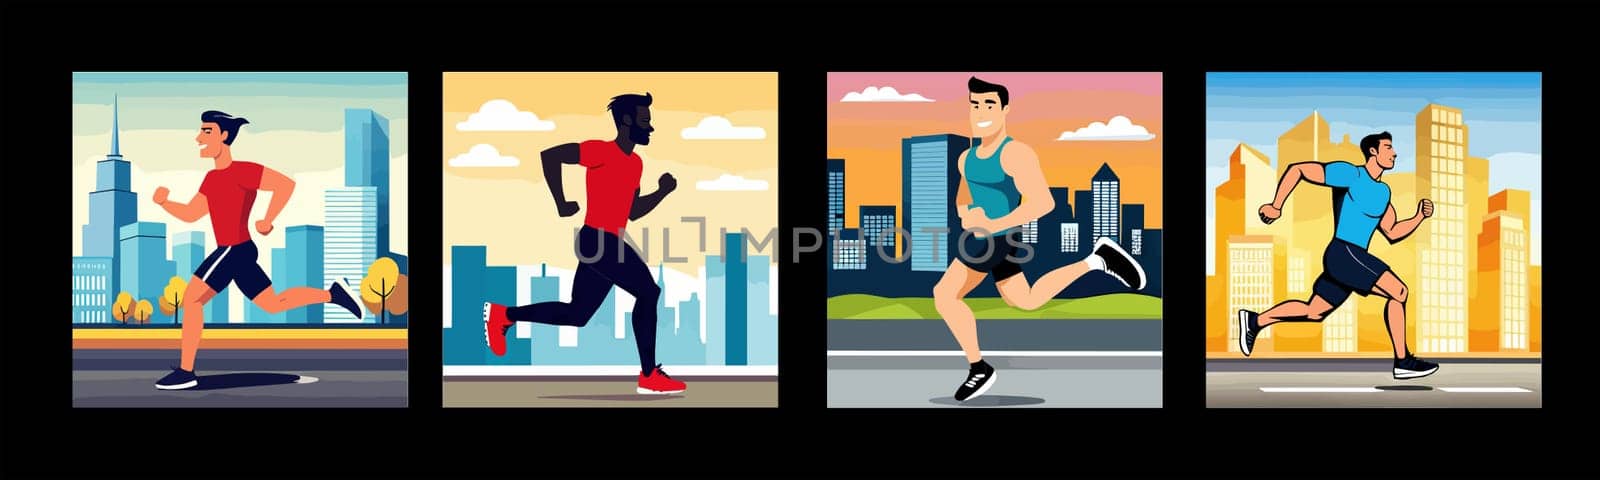 Banner Runners set. Flat concept illustrations athletes running in park by EkaterinaPereslavtseva